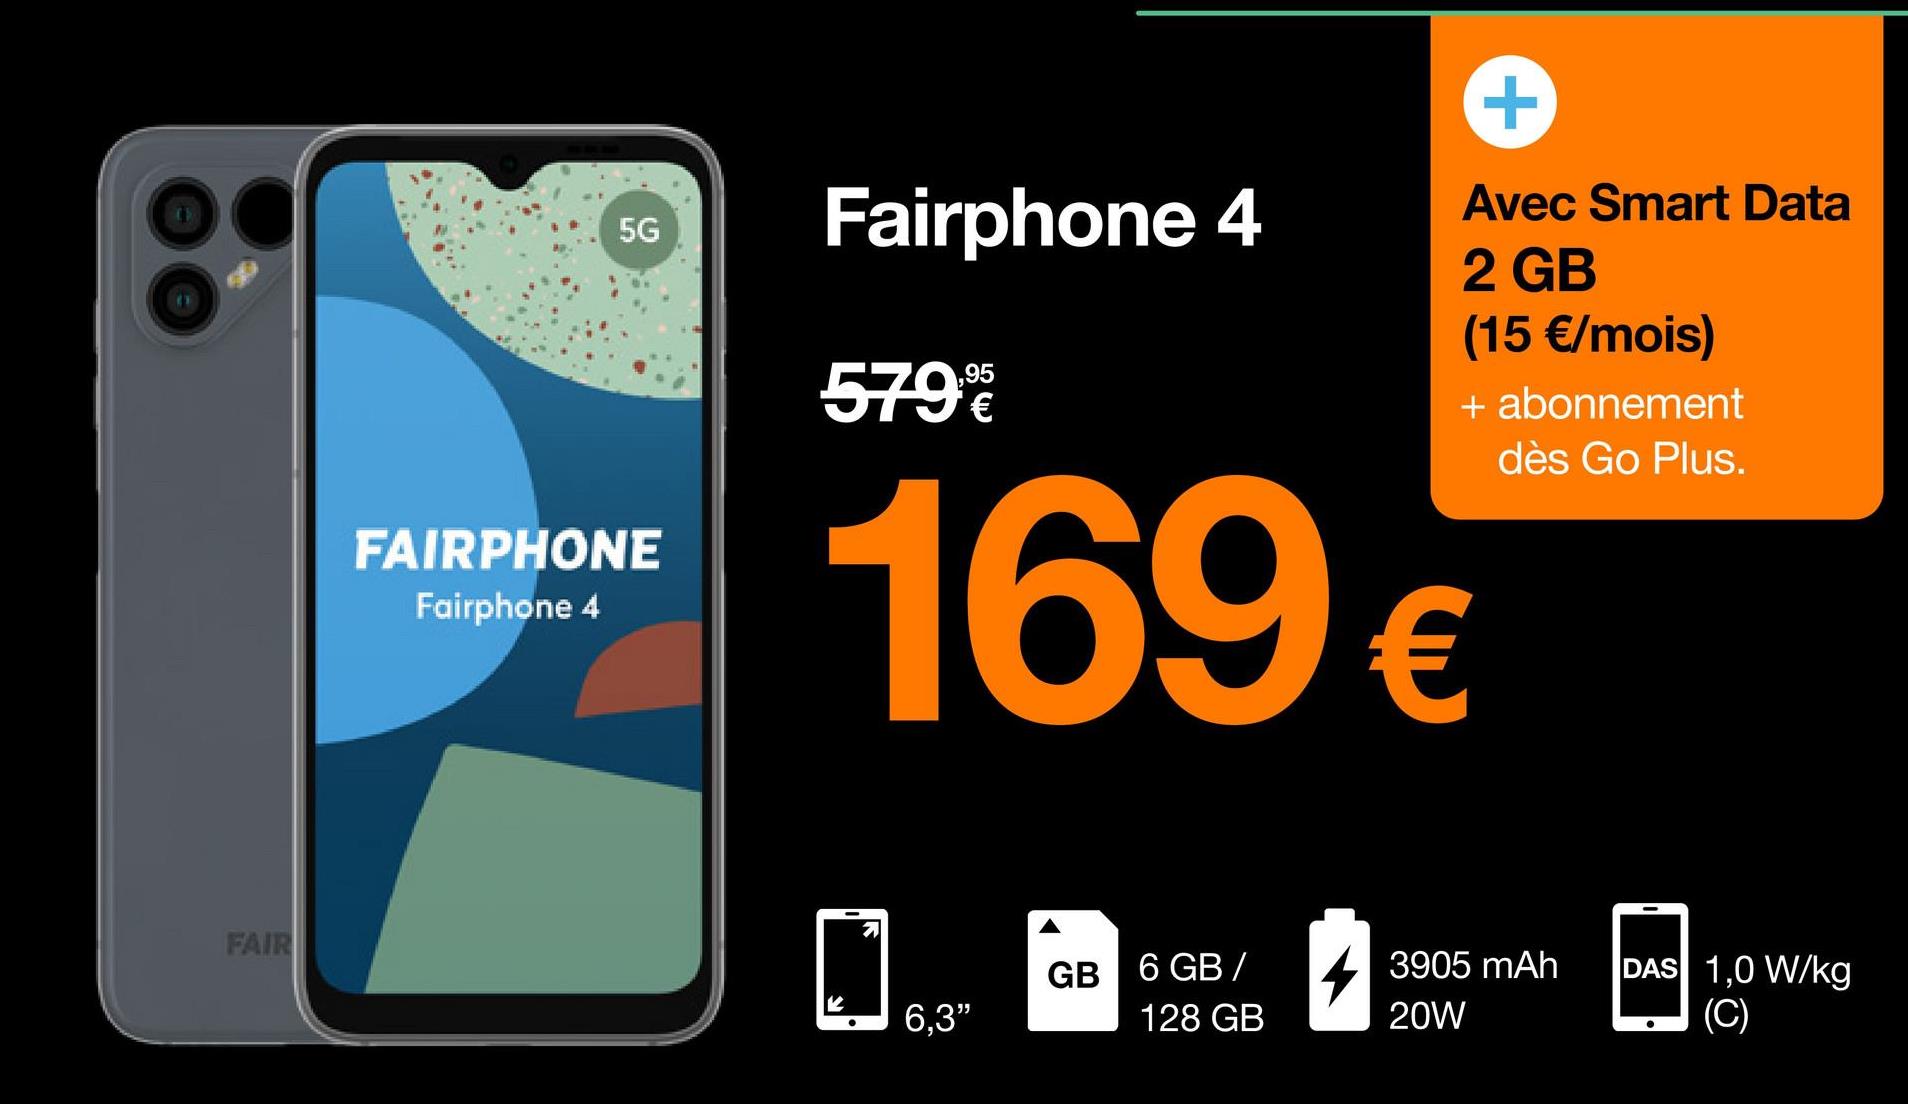 FAIR
5G
FAIRPHONE
Fairphone 4
Fairphone 4
579%
183²
6,3"
+
Avec Smart Data
2 GB
(15 €/mois)
169€
GB 6 GB/
128 GB
+ abonnement
dès Go Plus.
3905 mAh
20W
DAS 1,0 W/kg
(C)